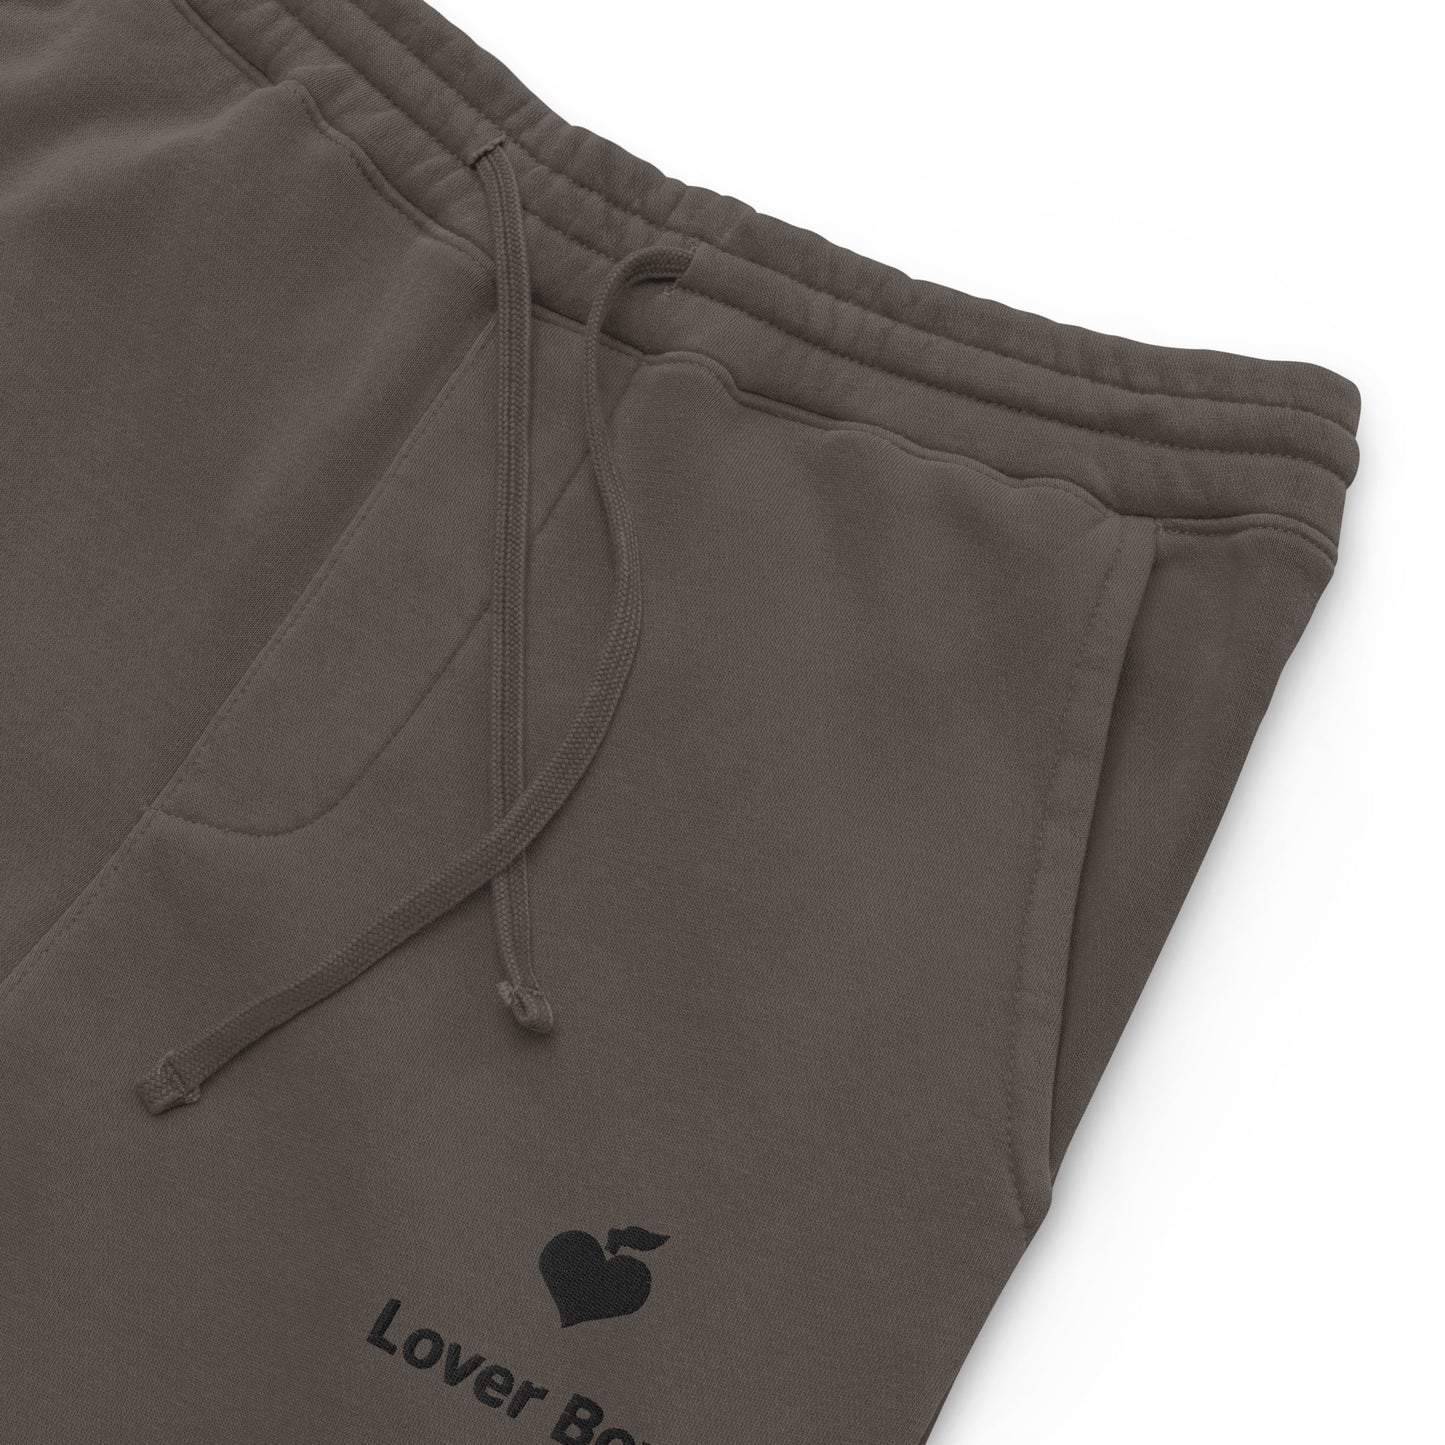 Lover Boy - Unisex pigment-dyed sweatpants